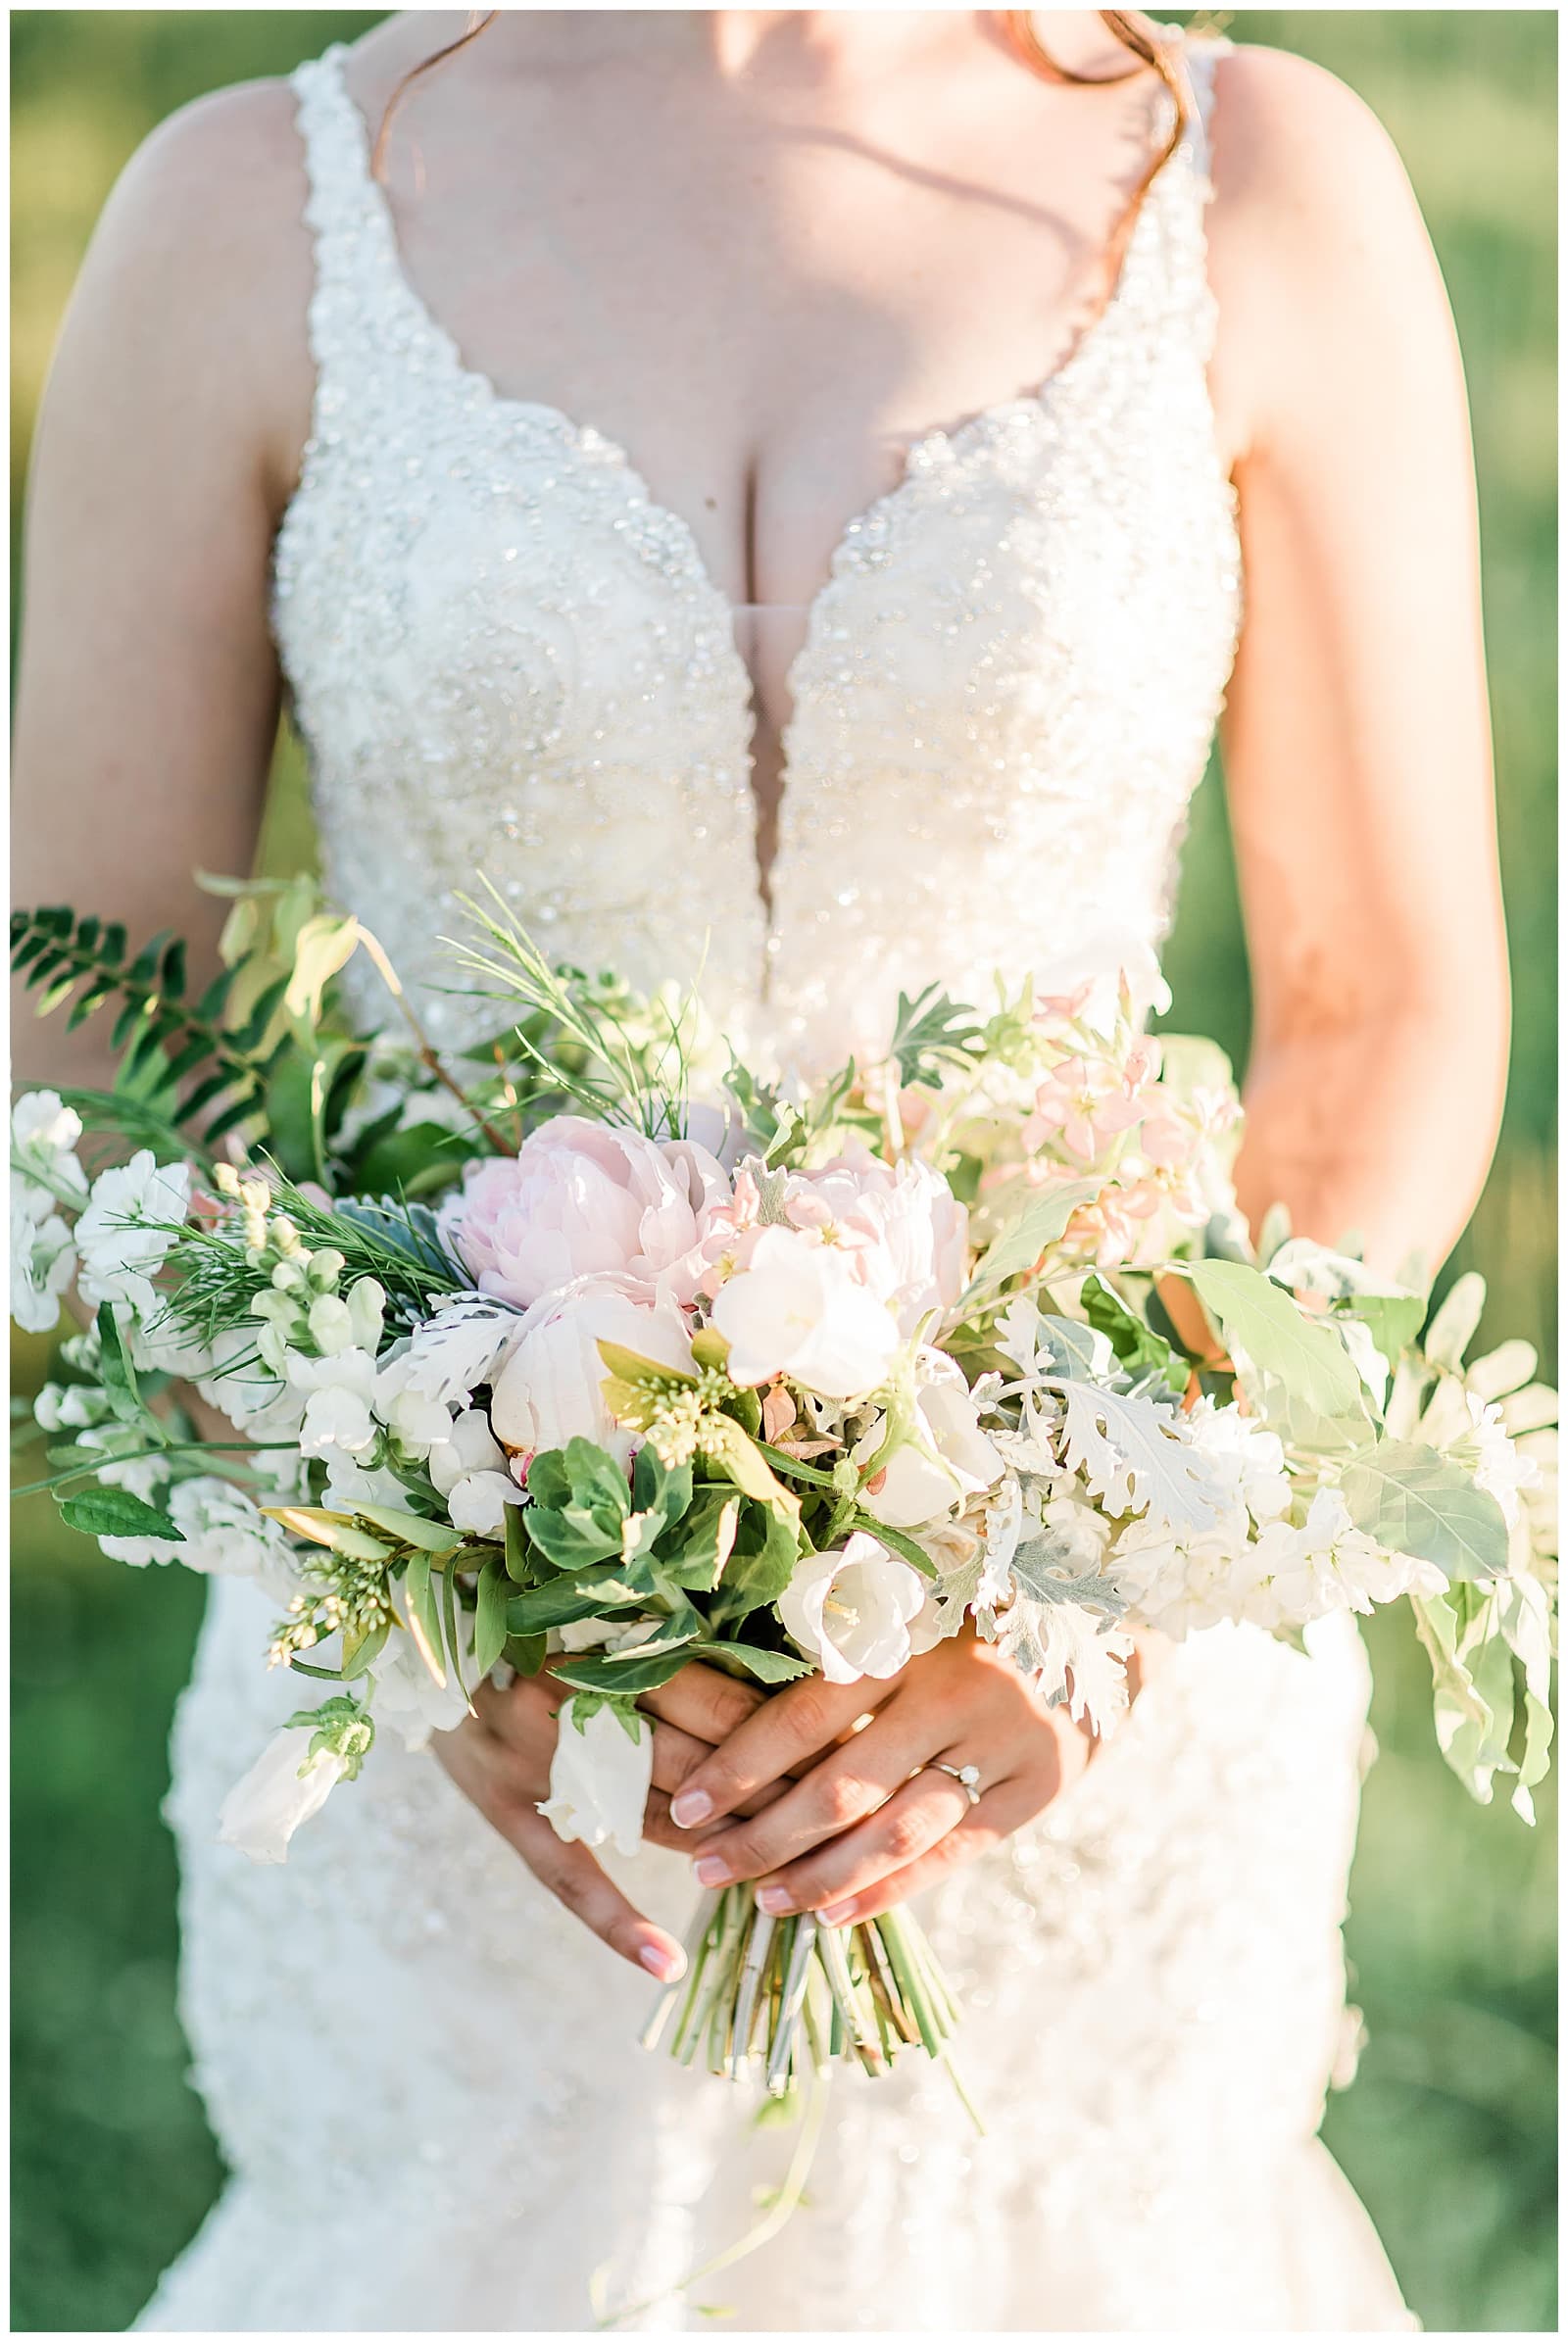 Danielle-Defayette-Photography-Middle-Fork-Barn-Abingdon-Wedding-2020_0009.jpg